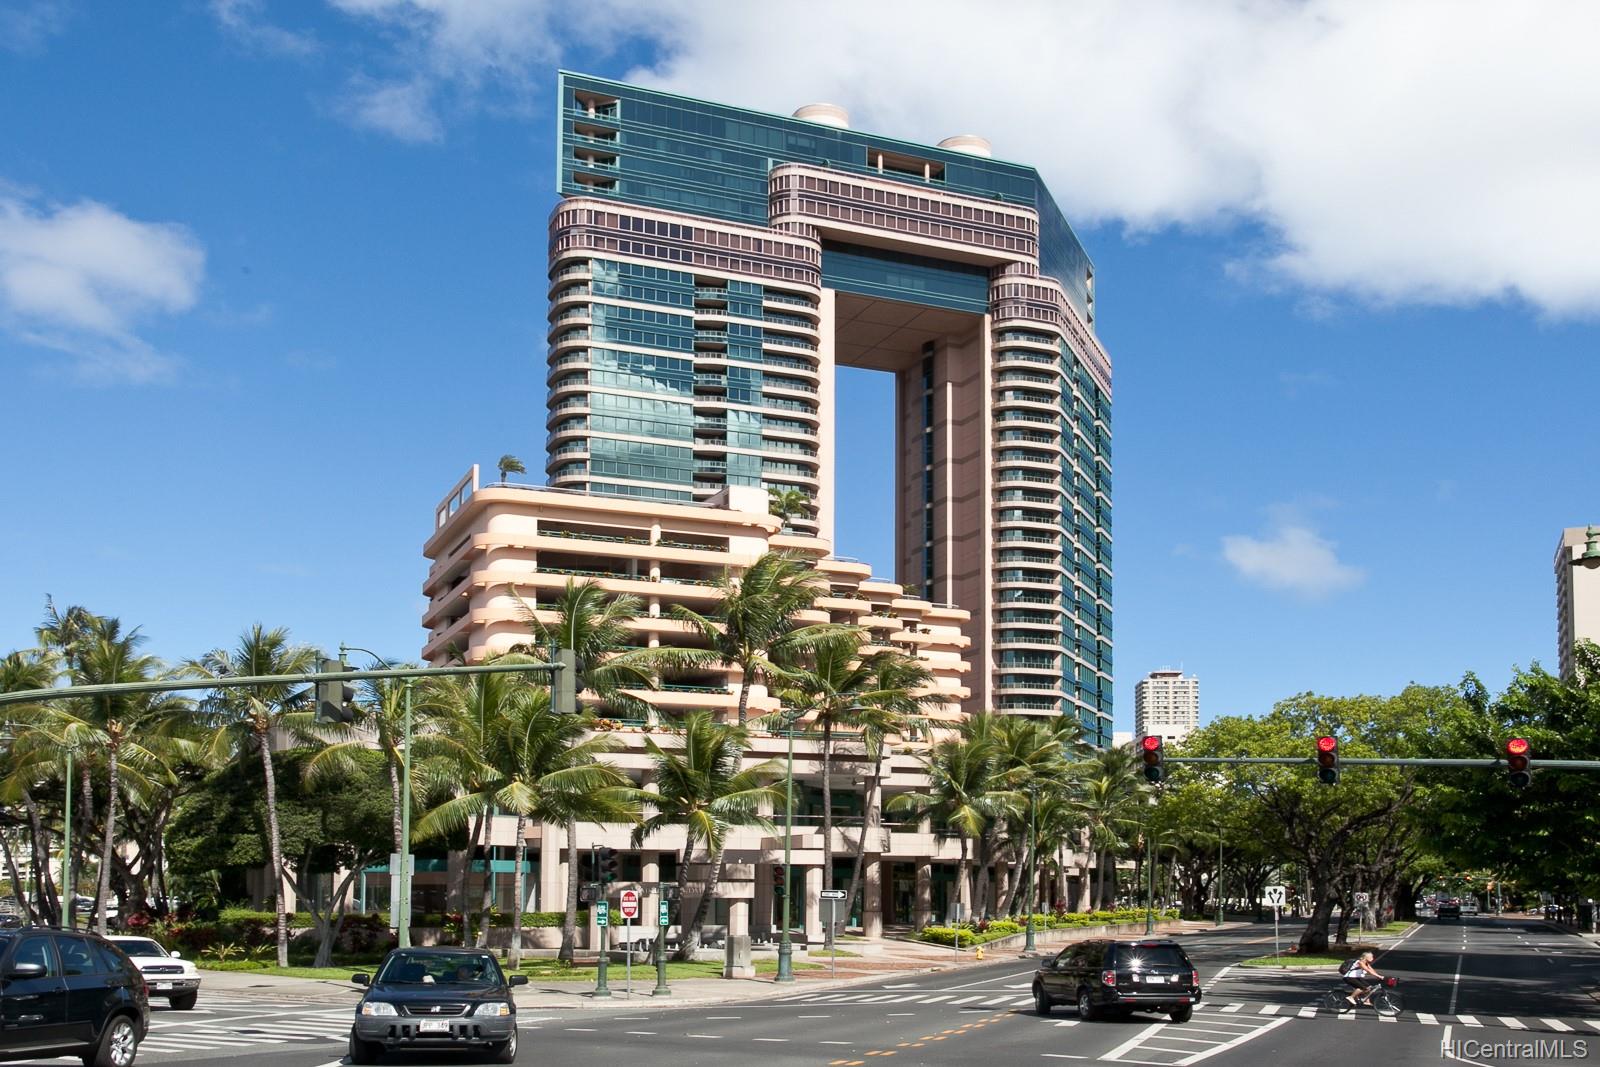 Waikiki landmark honolulu